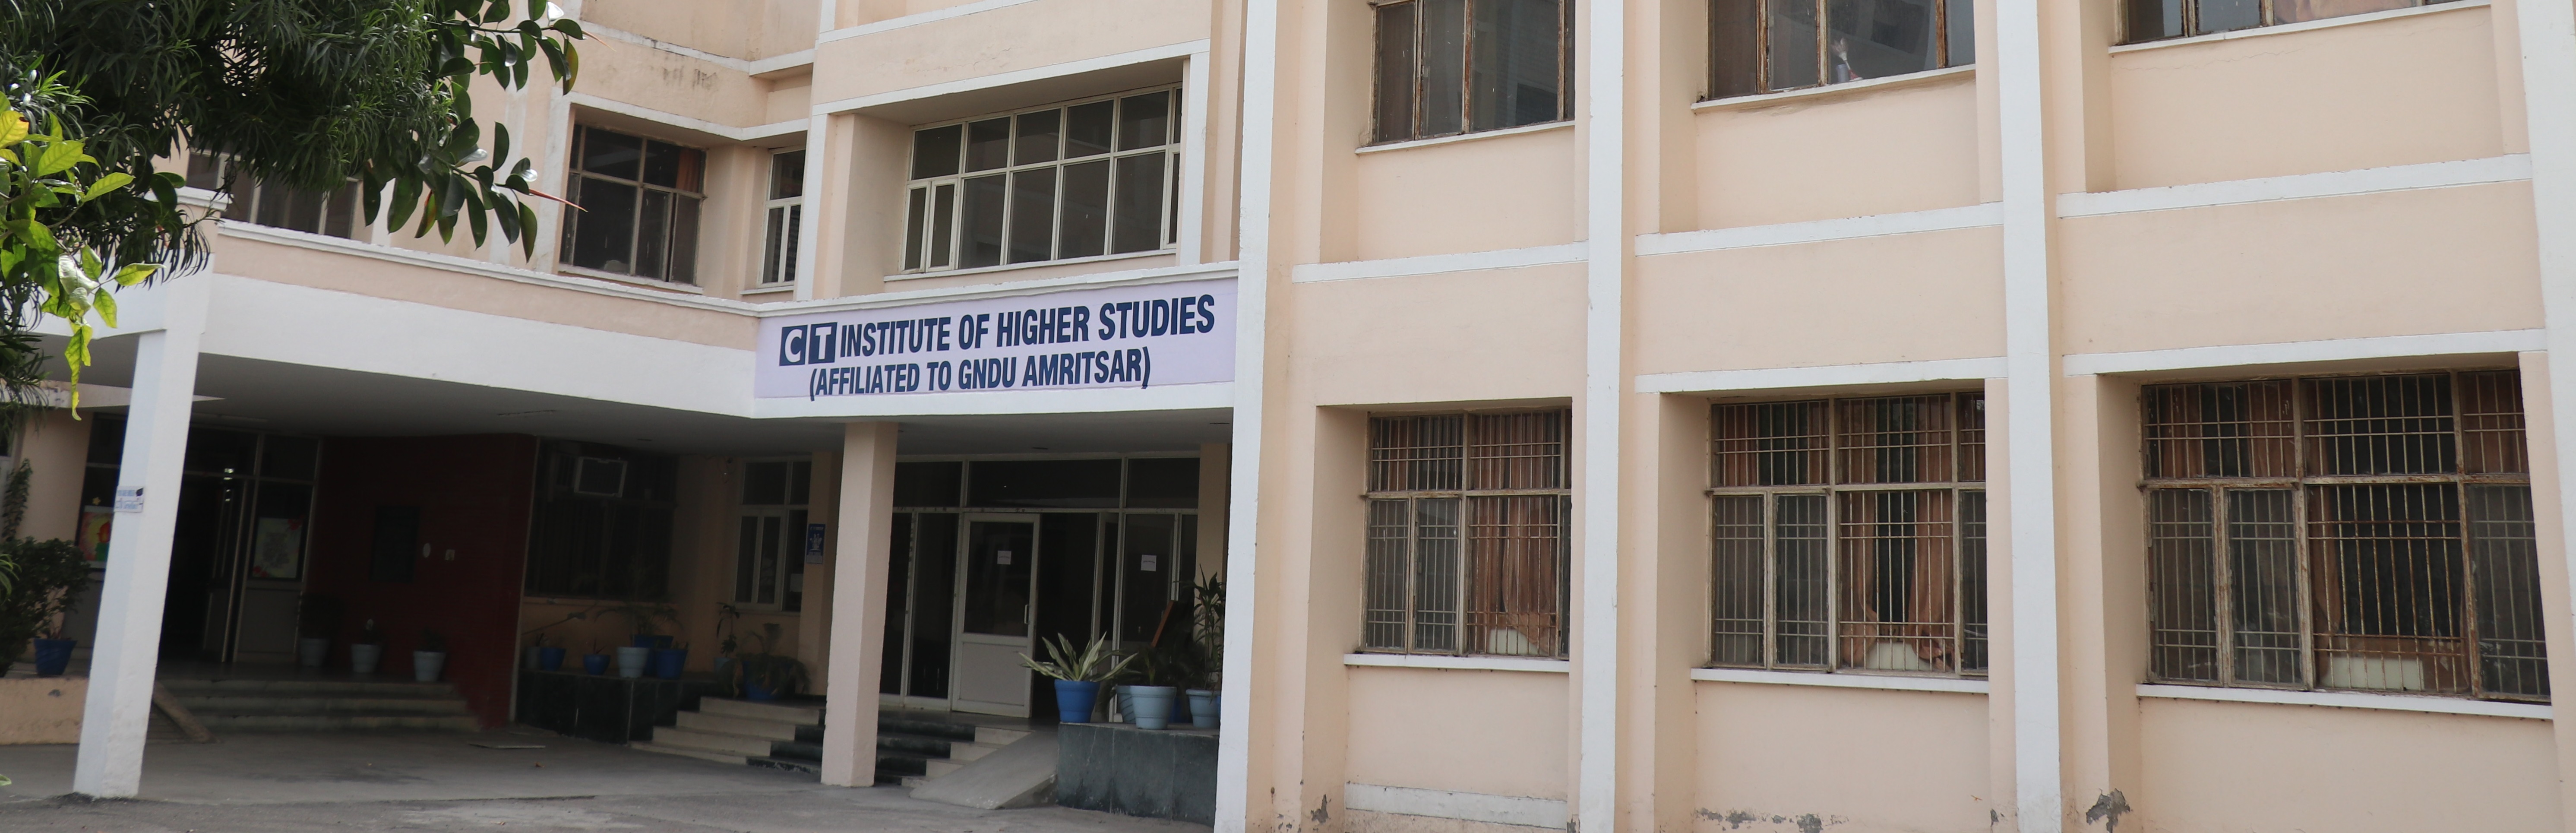 CT Institute of Higher Studies, Jalandhar Image